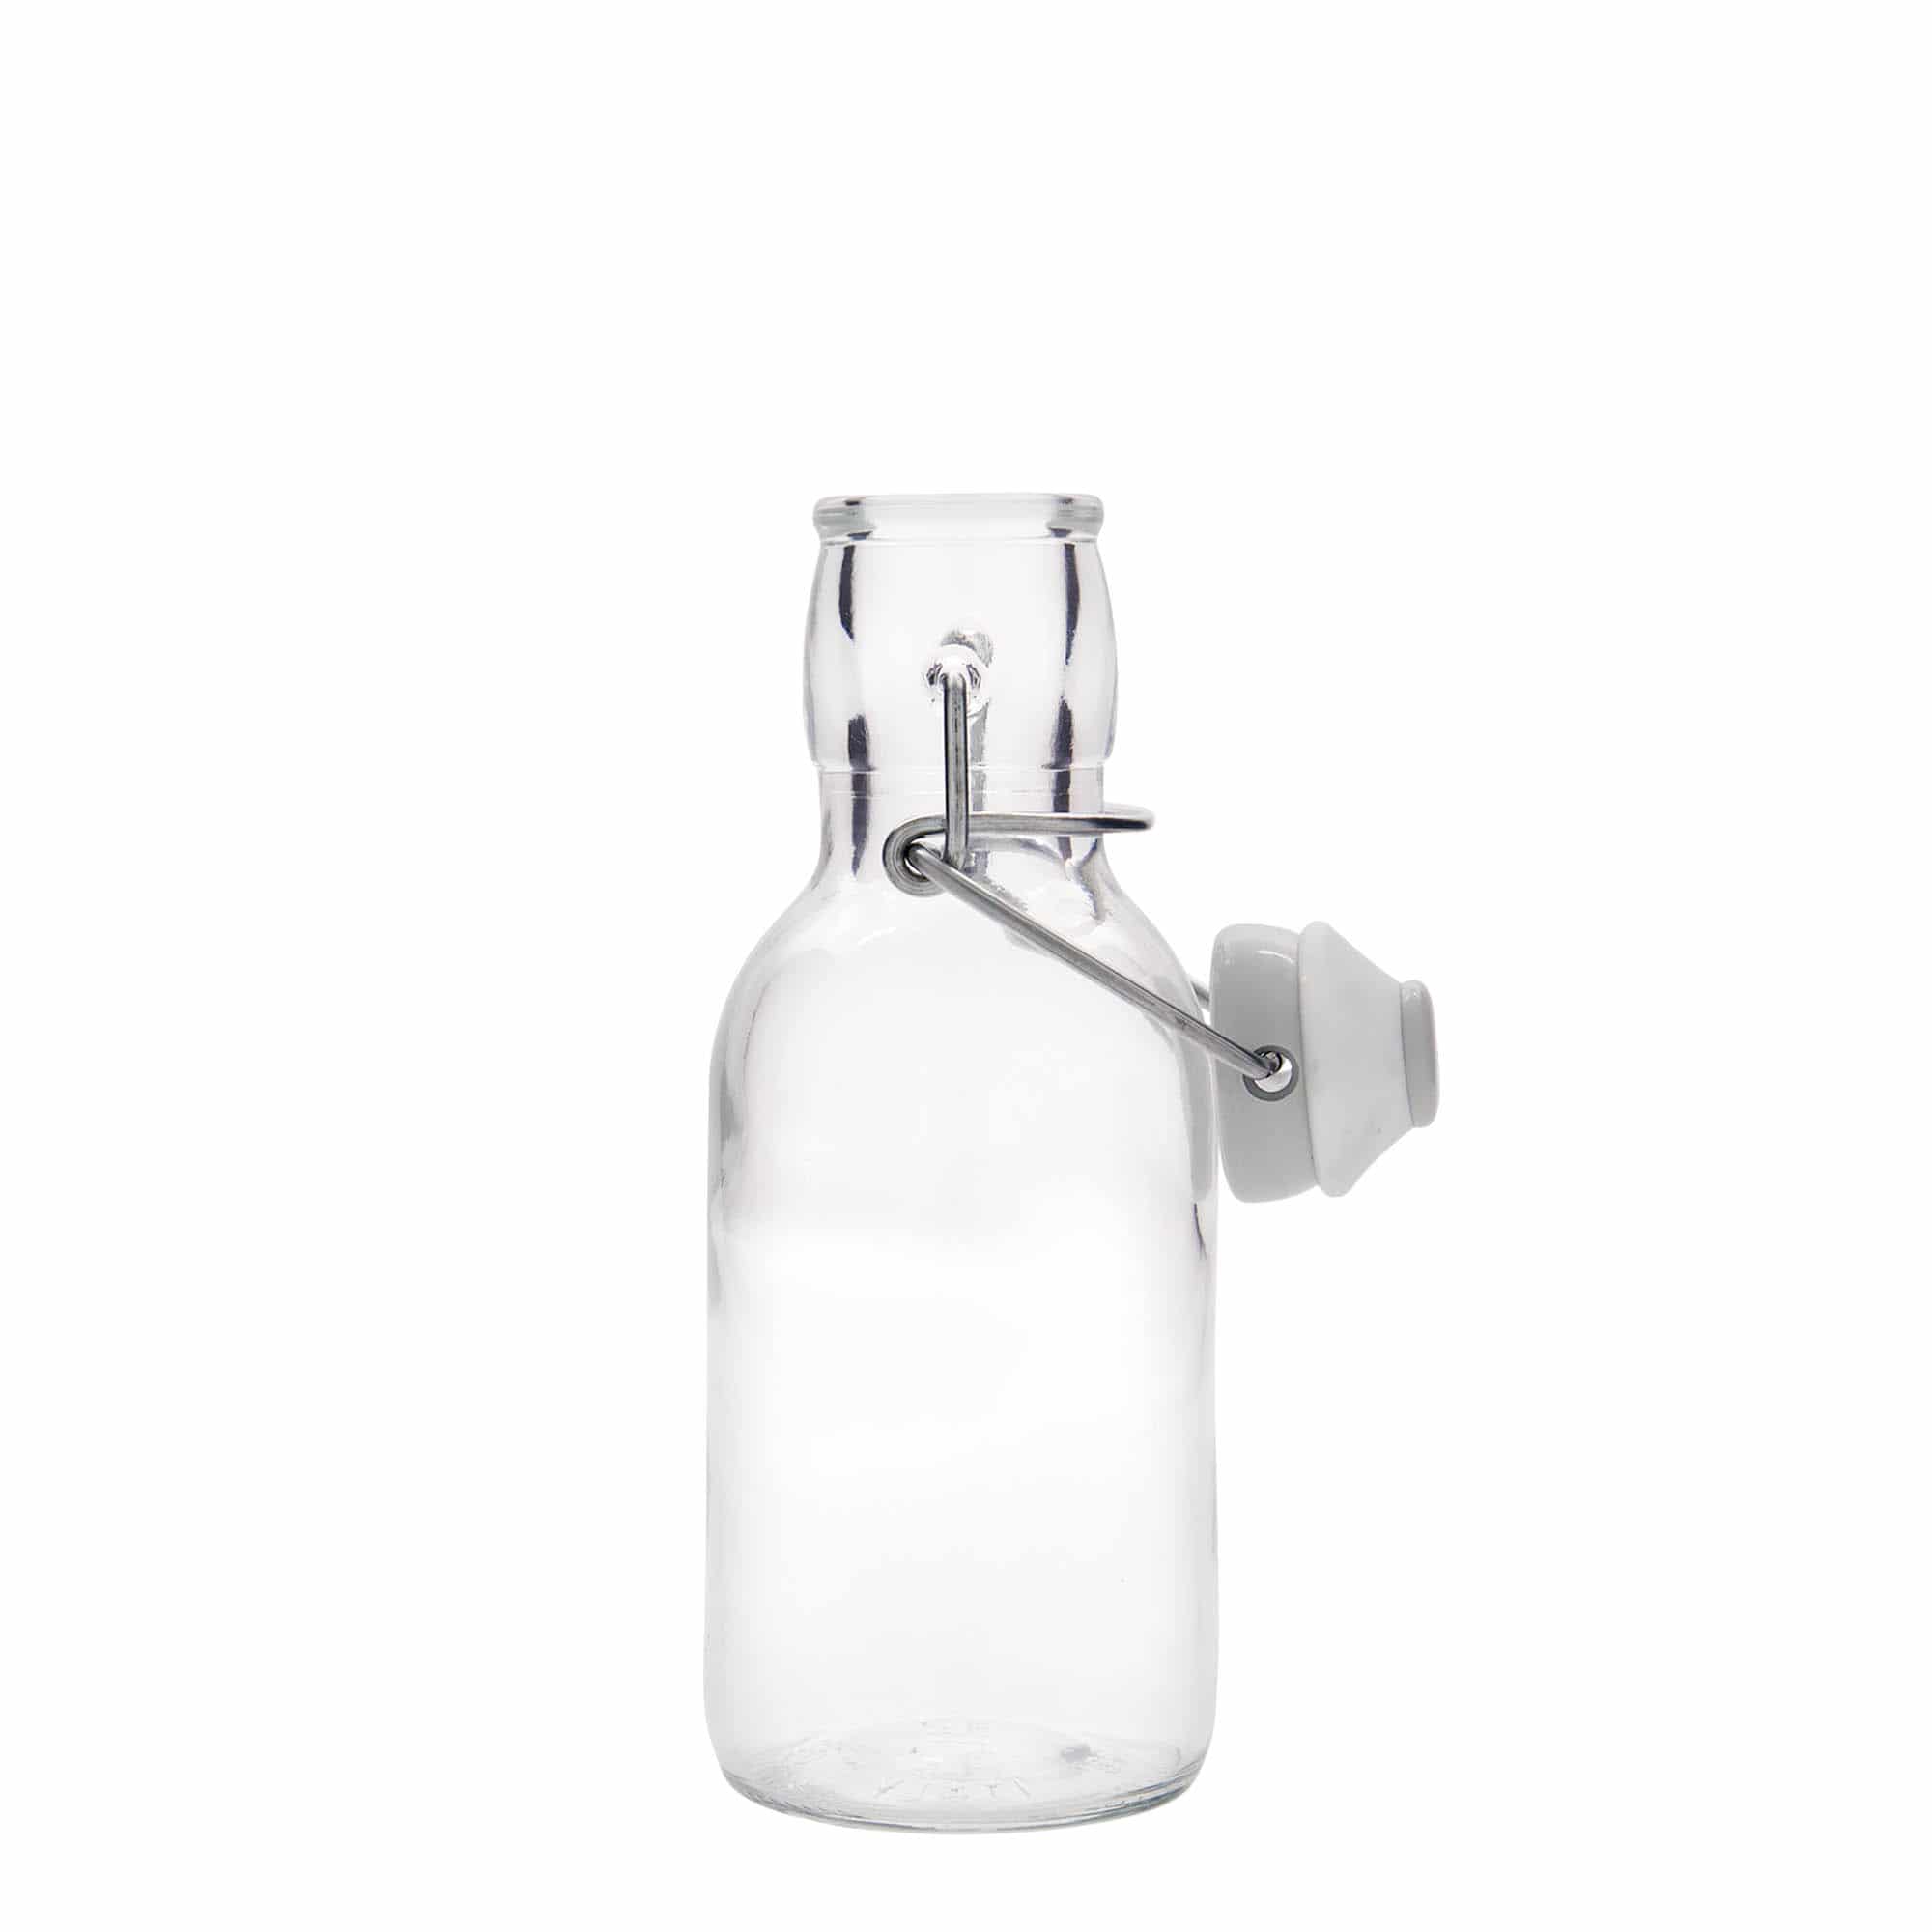 250 ml glass bottle 'Emilia', closure: swing top